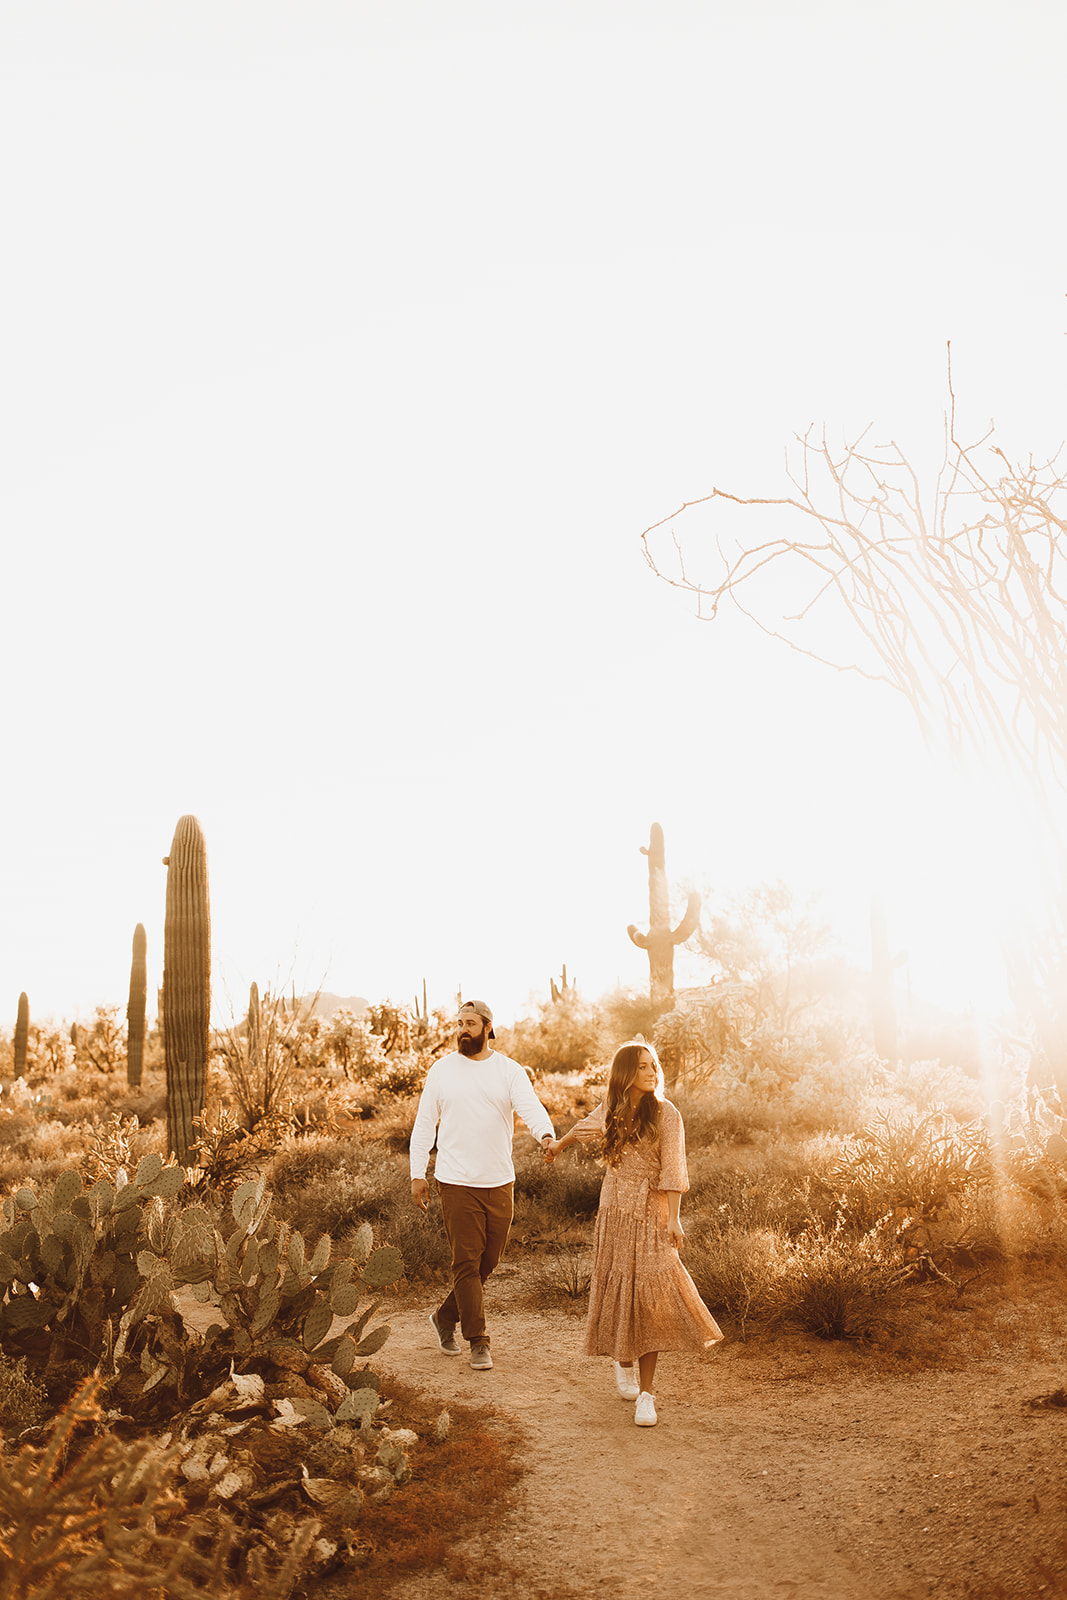 This image shows Jordan and her husband Matt holding hands while walking through the desert.